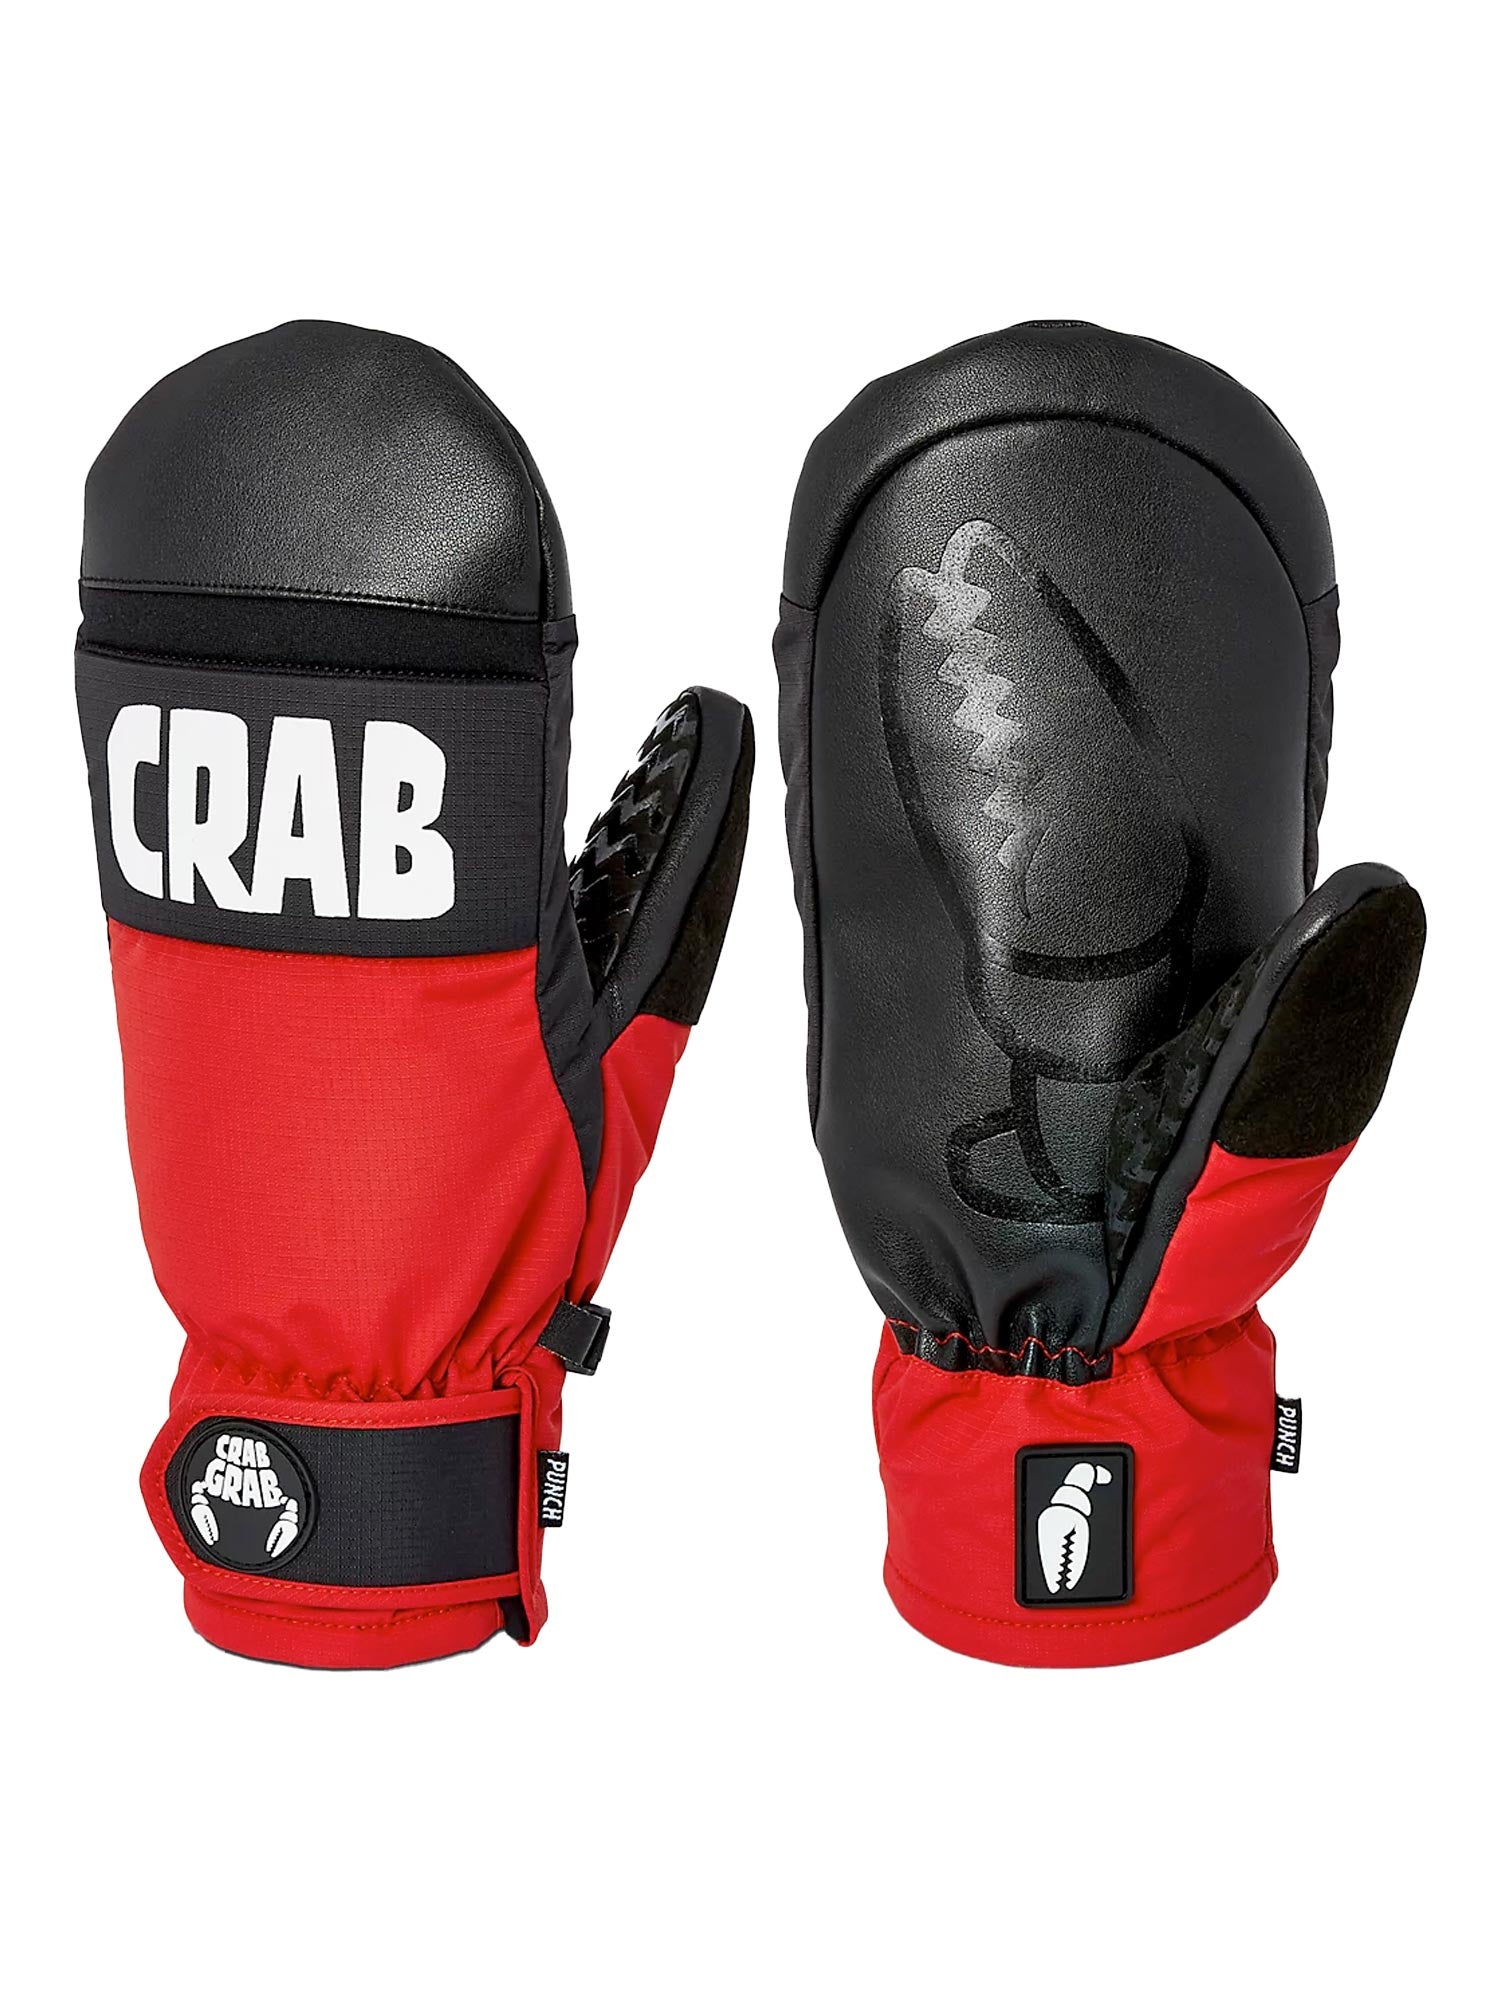 Crab Grab Punch Mitt - Men's